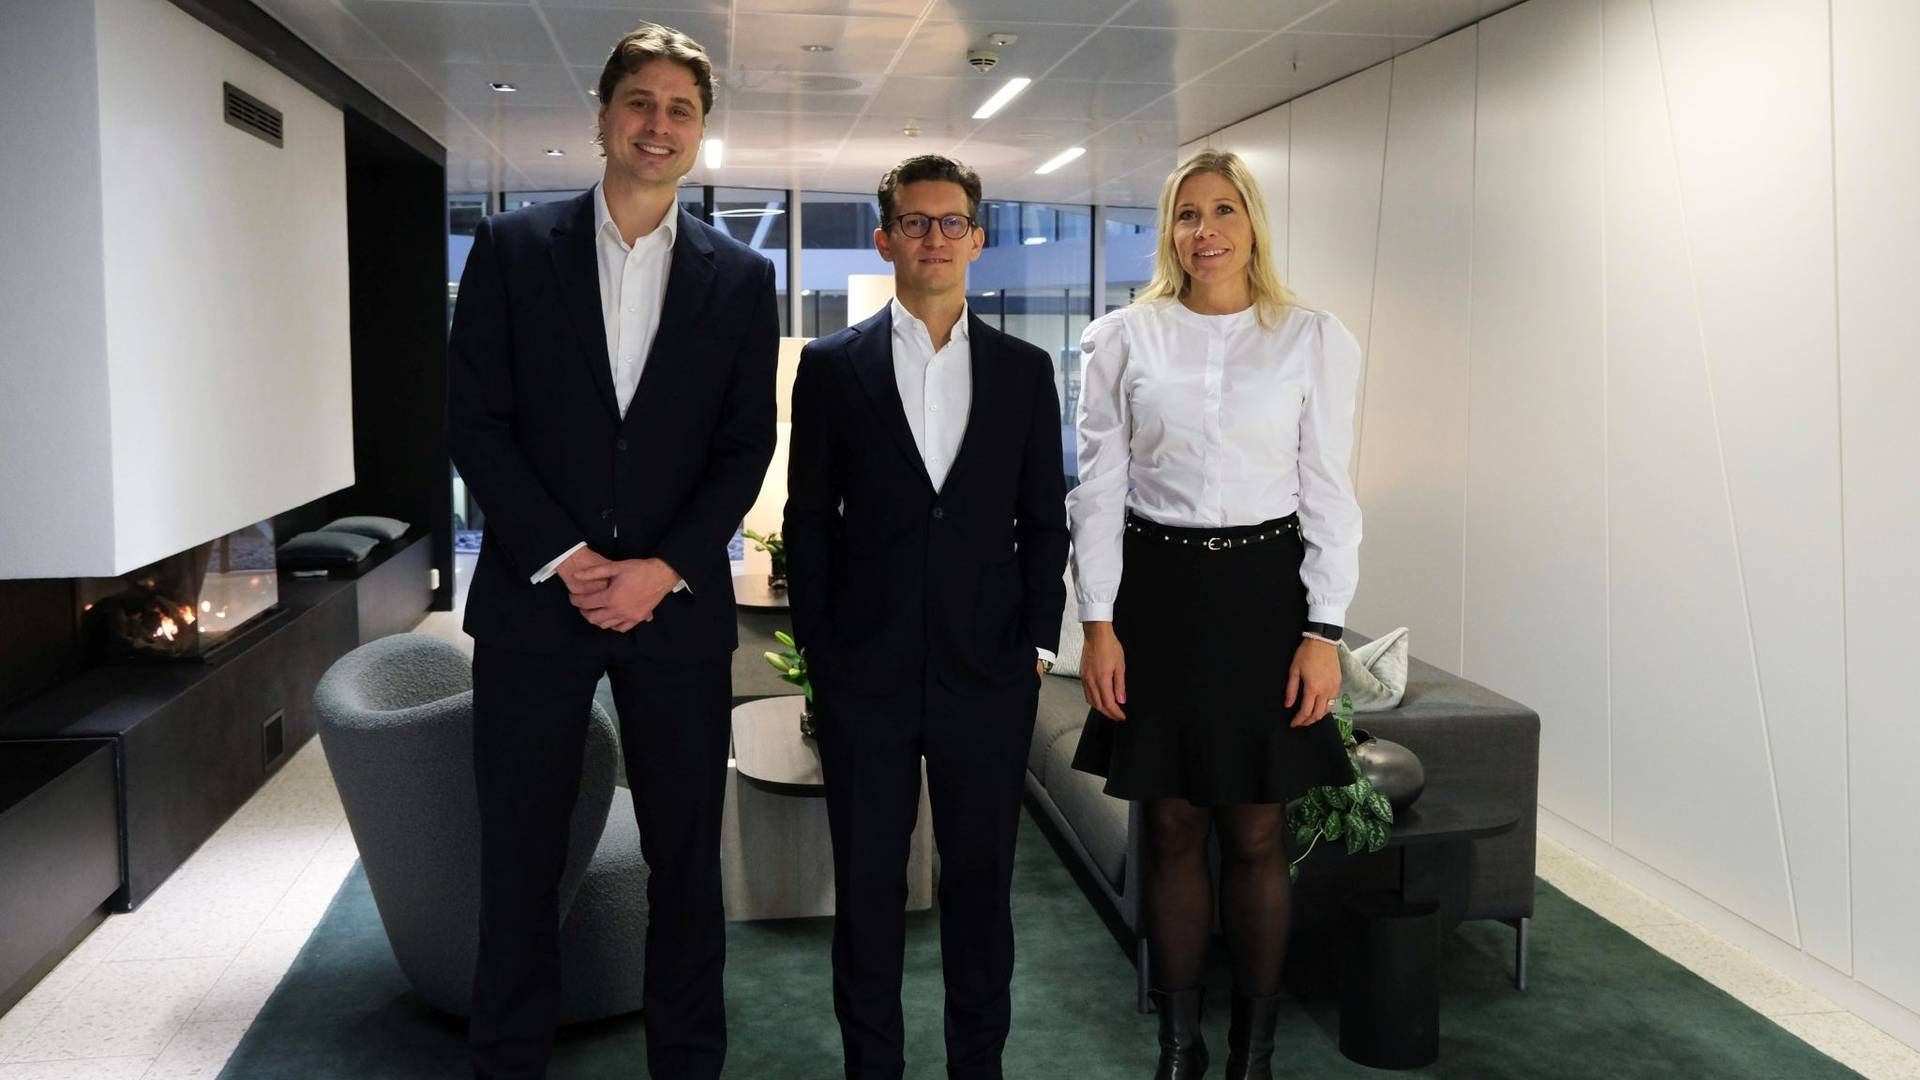 Fredrik Dahm, Andreas Rabe og Anna Falck-Ytter kan nå kalle seg specialist counsel. | Foto: Wiersholm